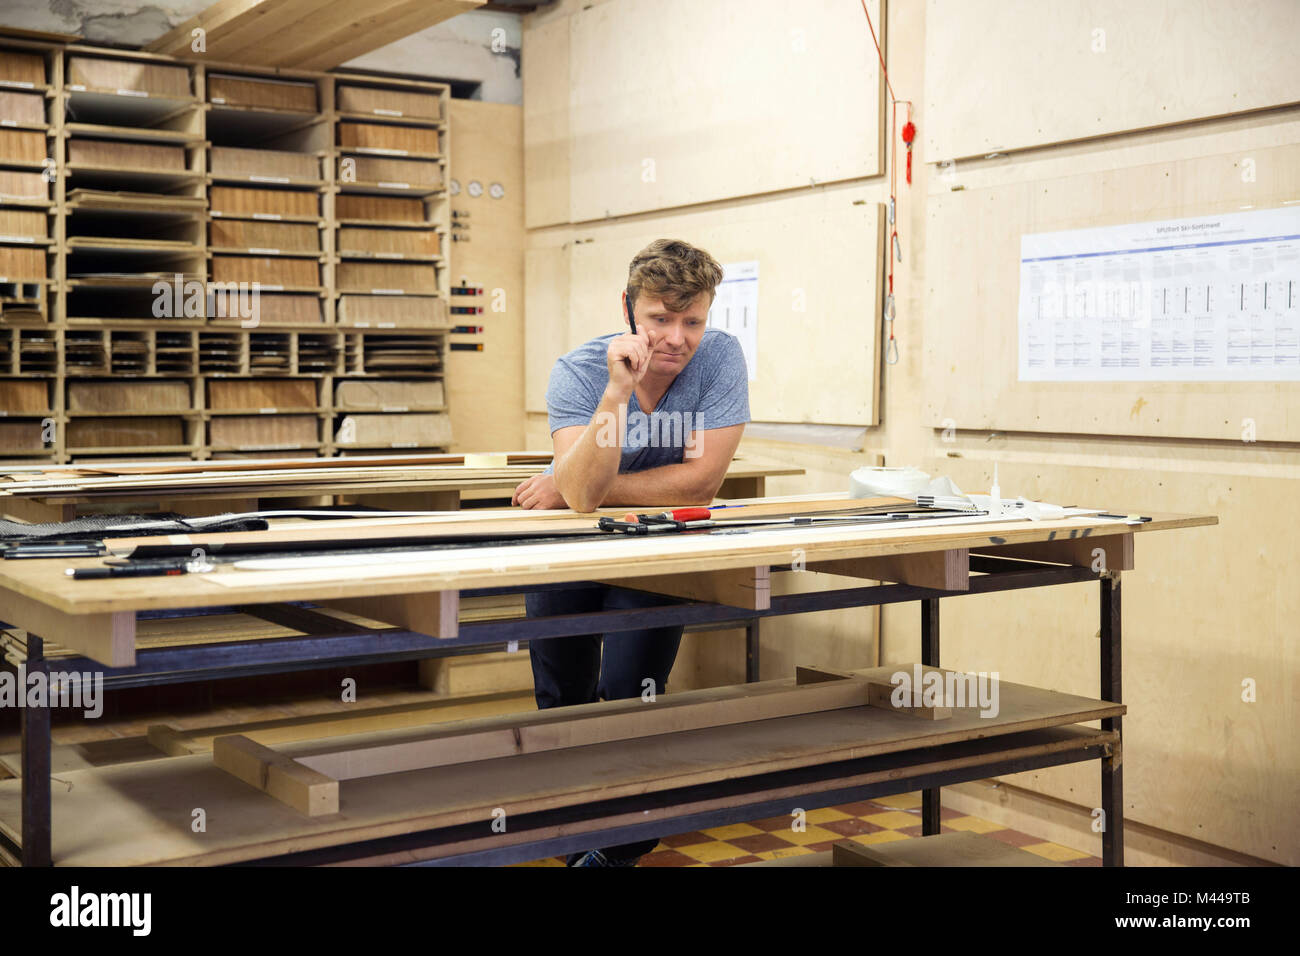 Man in workshop, making ski equipment, problem solving Stock Photo